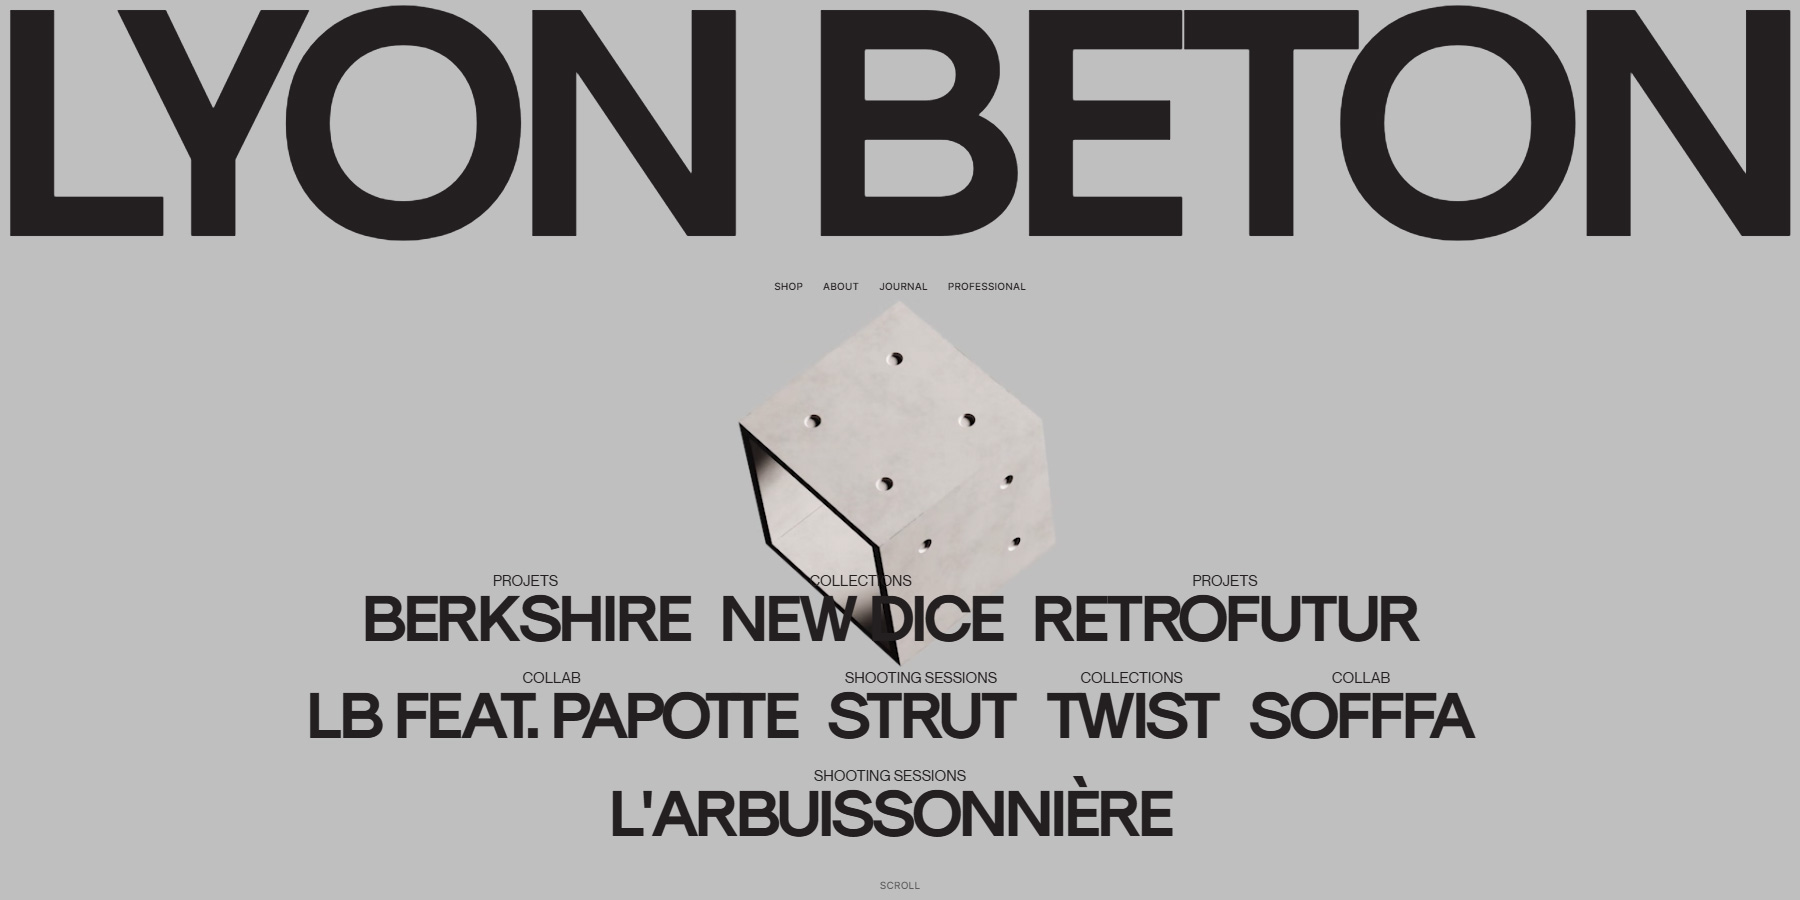 Lyon Béton - Website of the Month